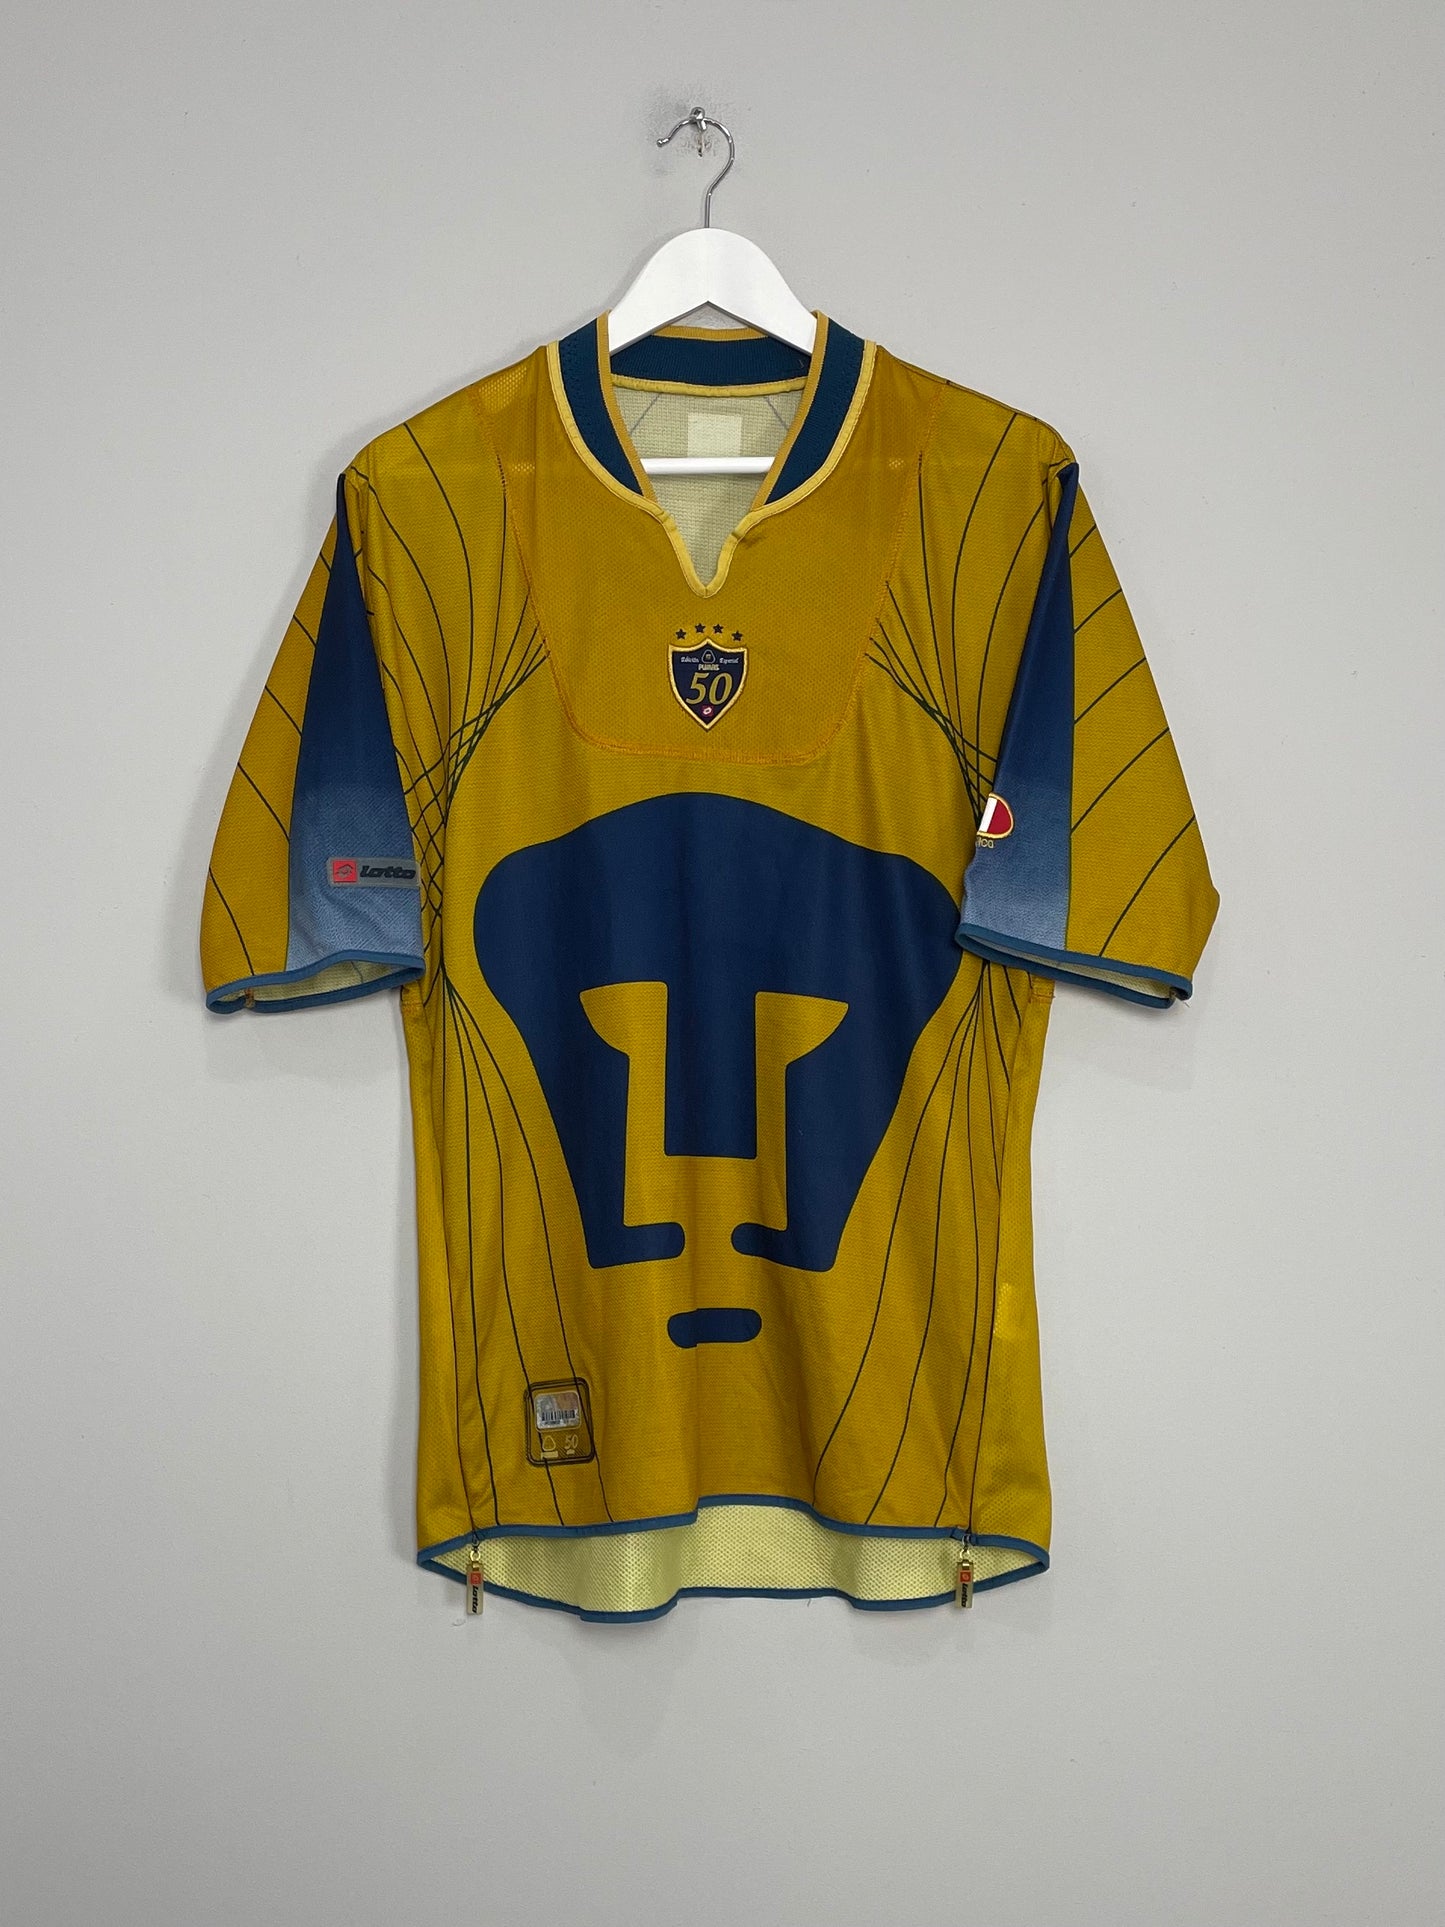 Image of the UNAM Pumas shirt from the 2003/04 season